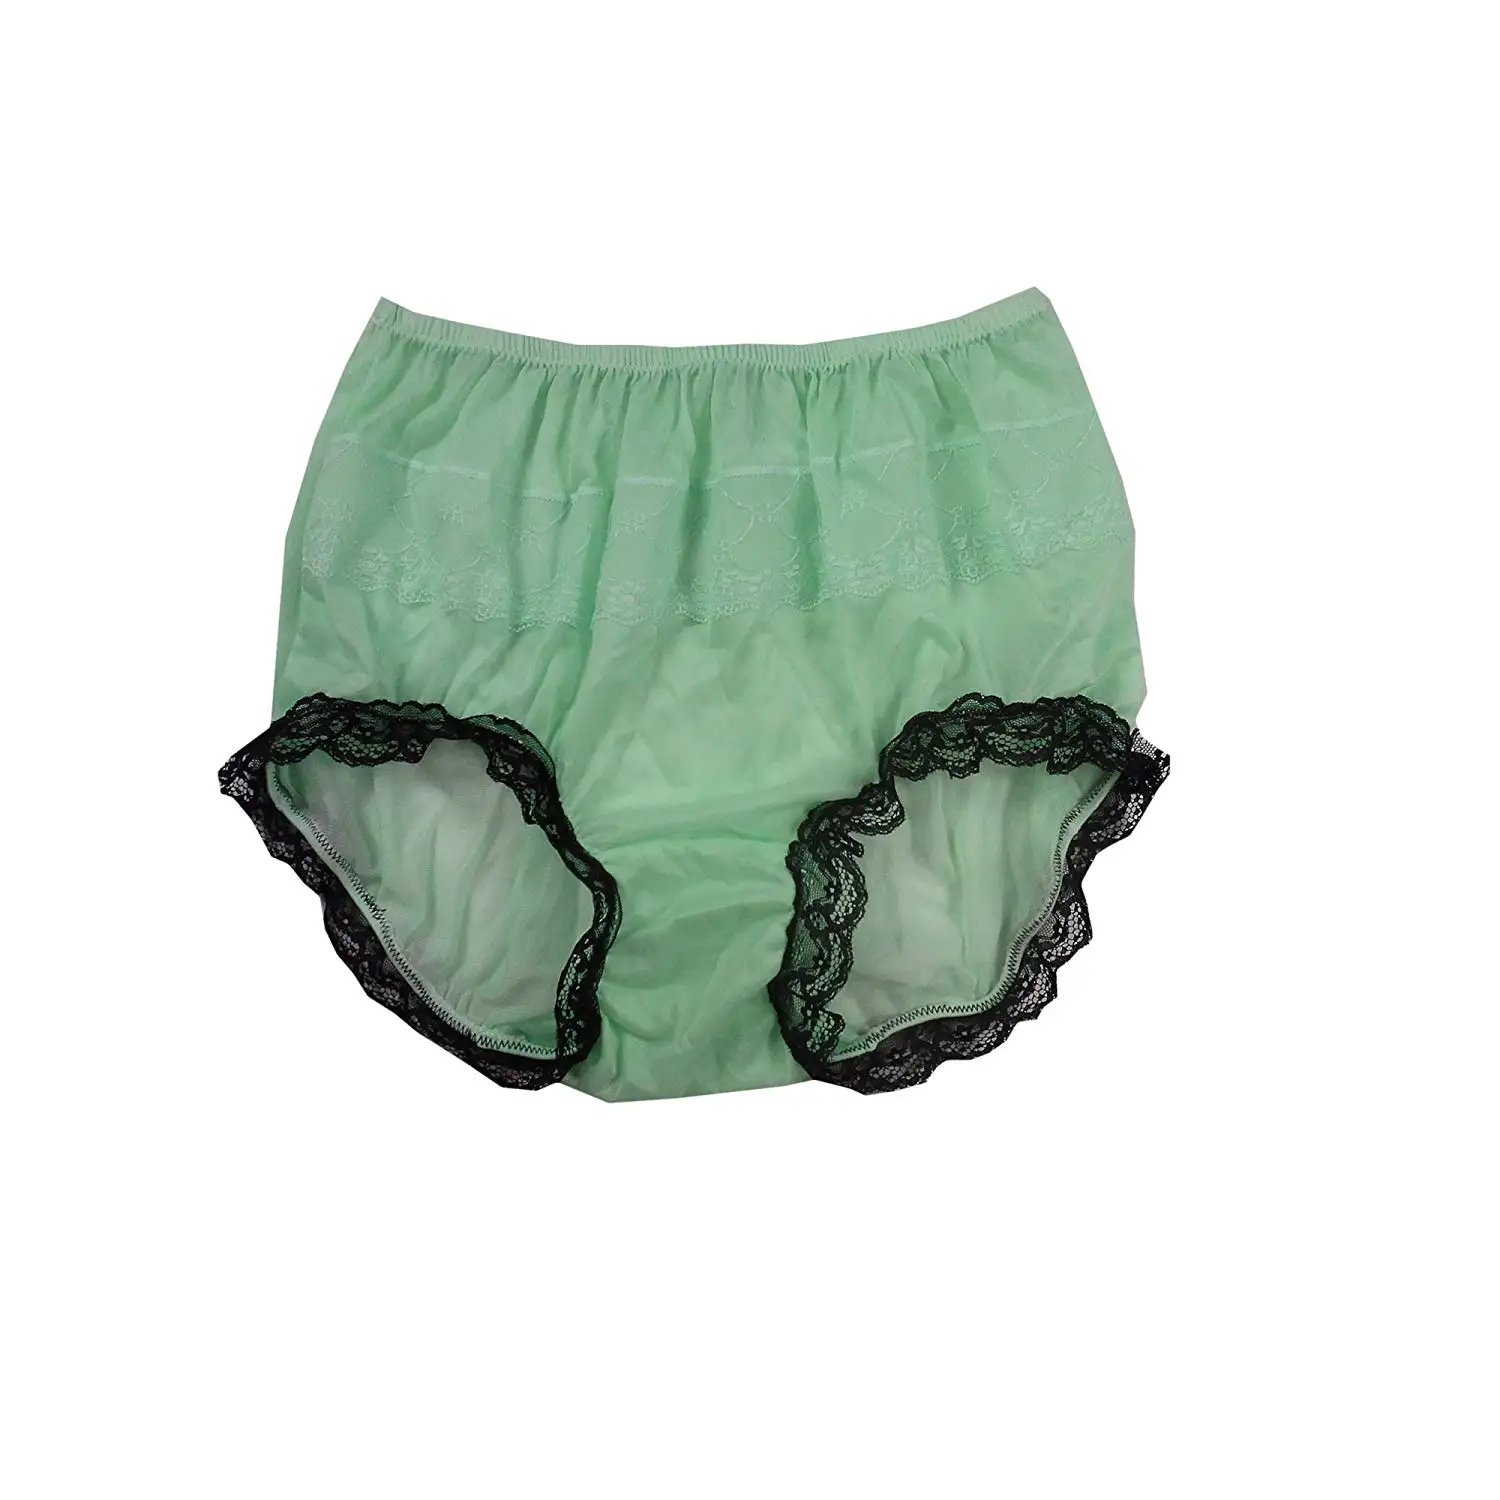 Buy JYH08D01 Fair Green Handmade Lingerie for Women Briefs Panties ...